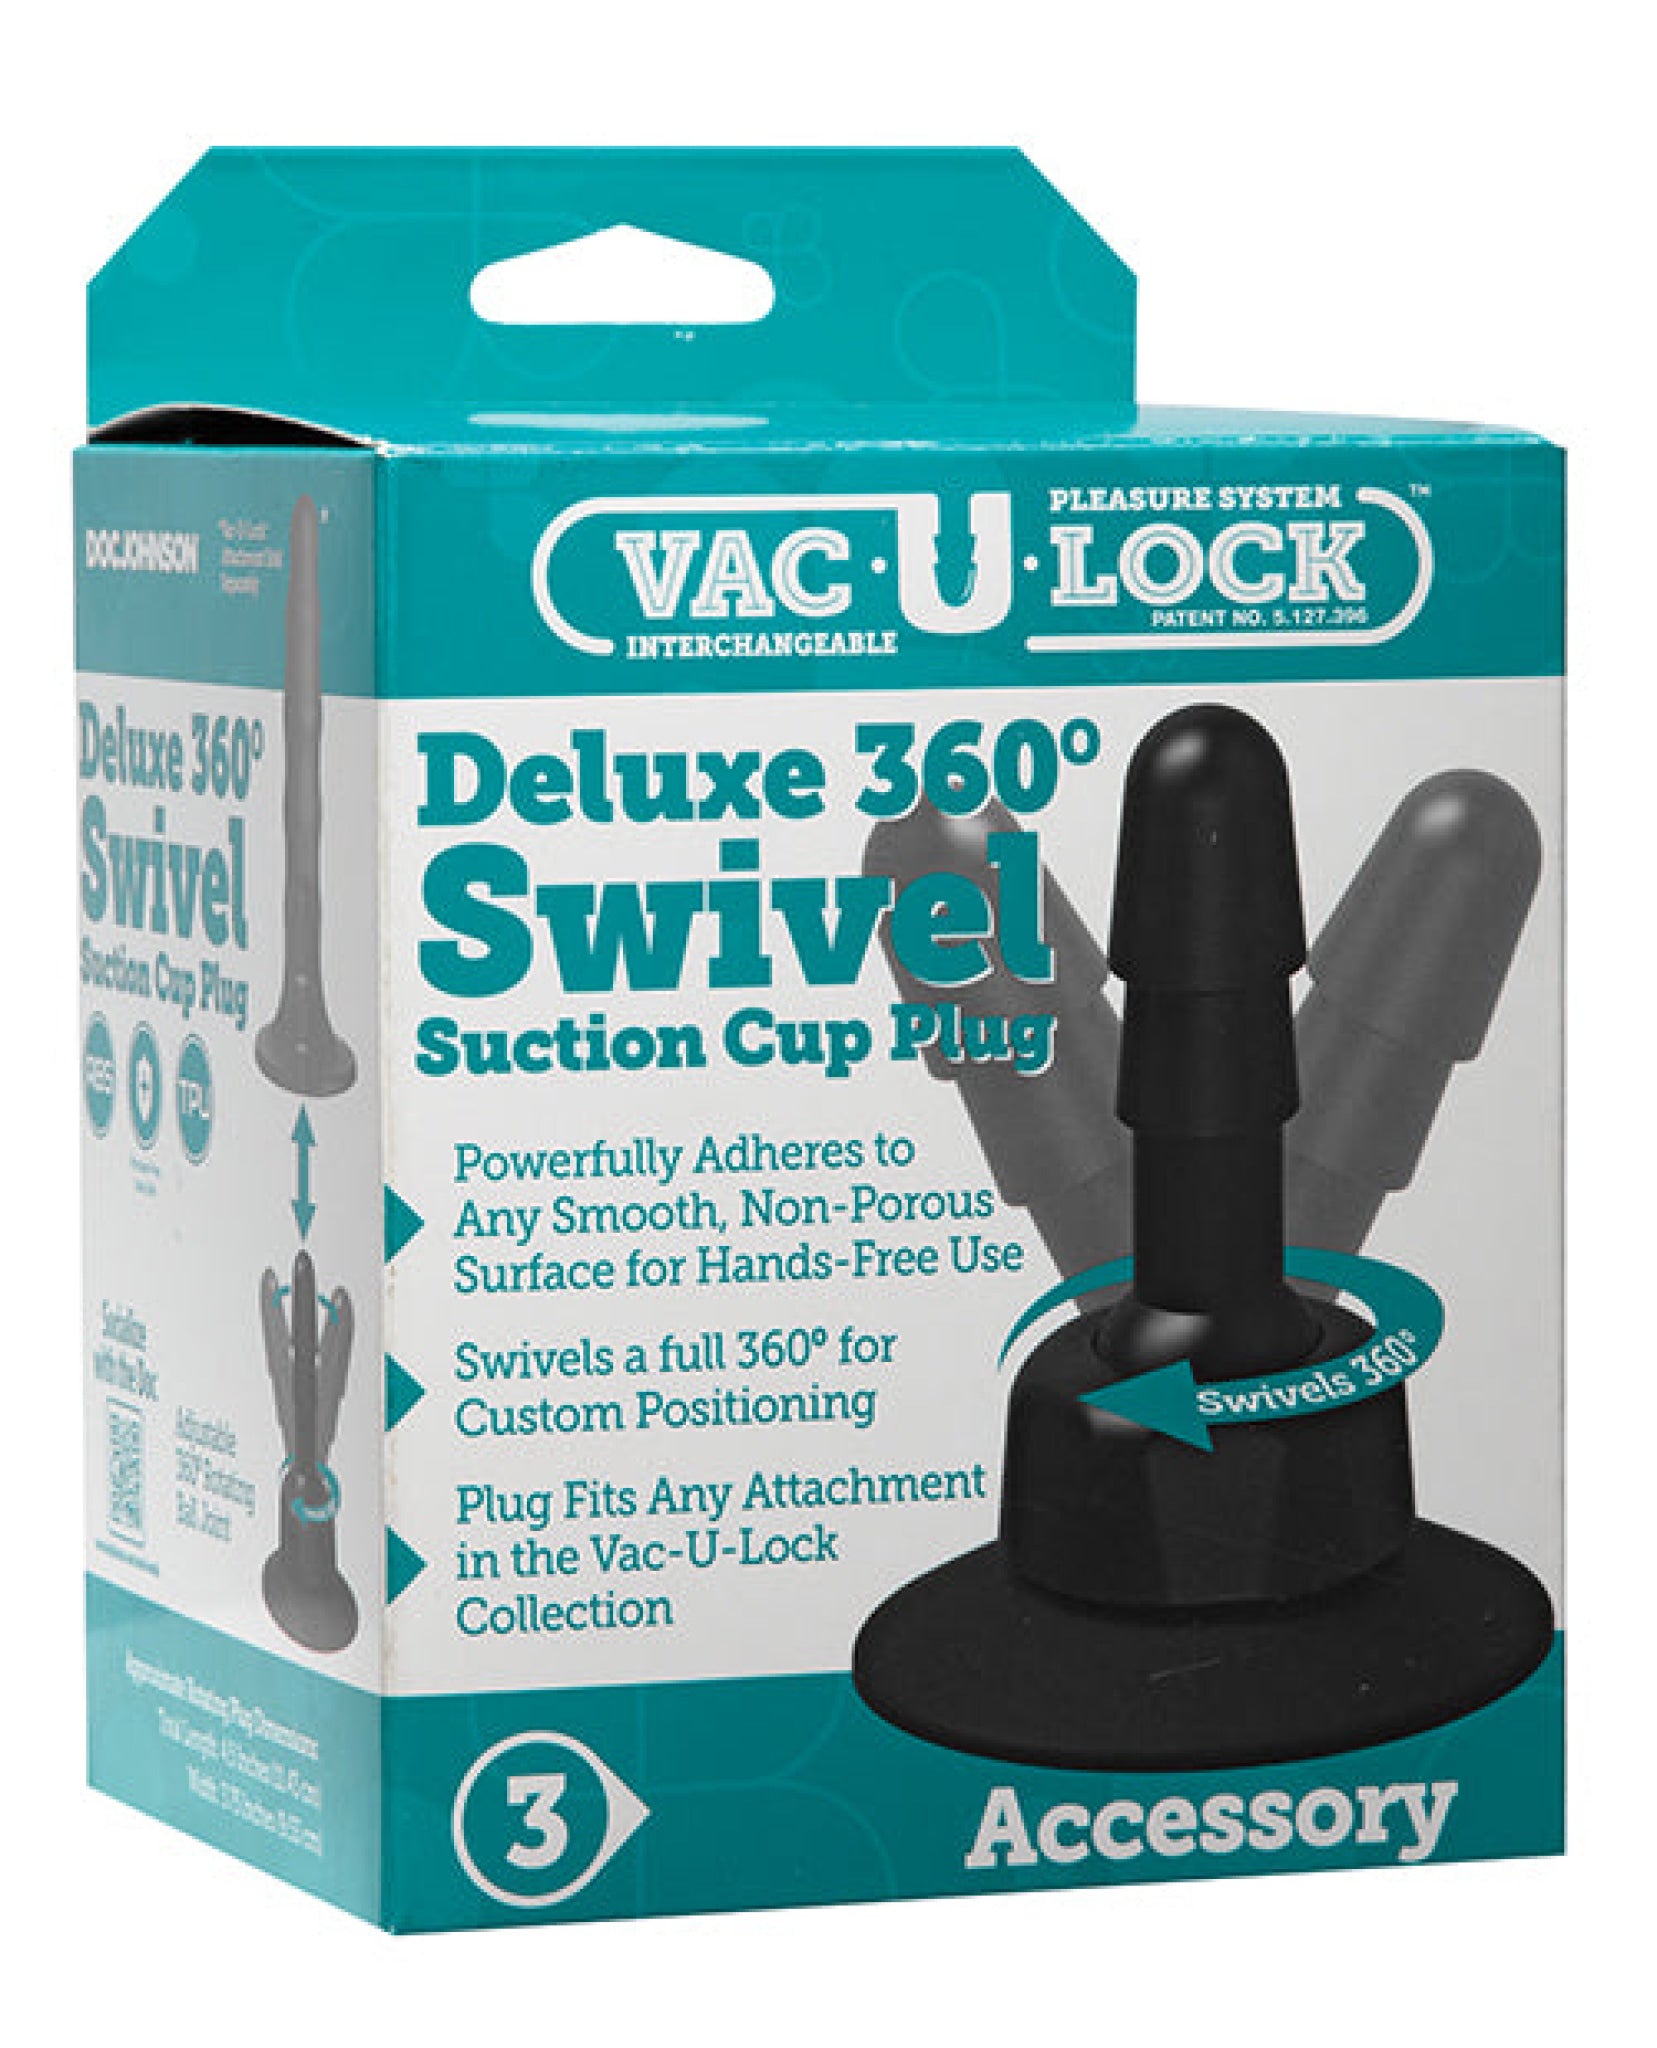 Vac-u-lock Deluxe 360 Swivel Suction Cup Plug Doc Johnson